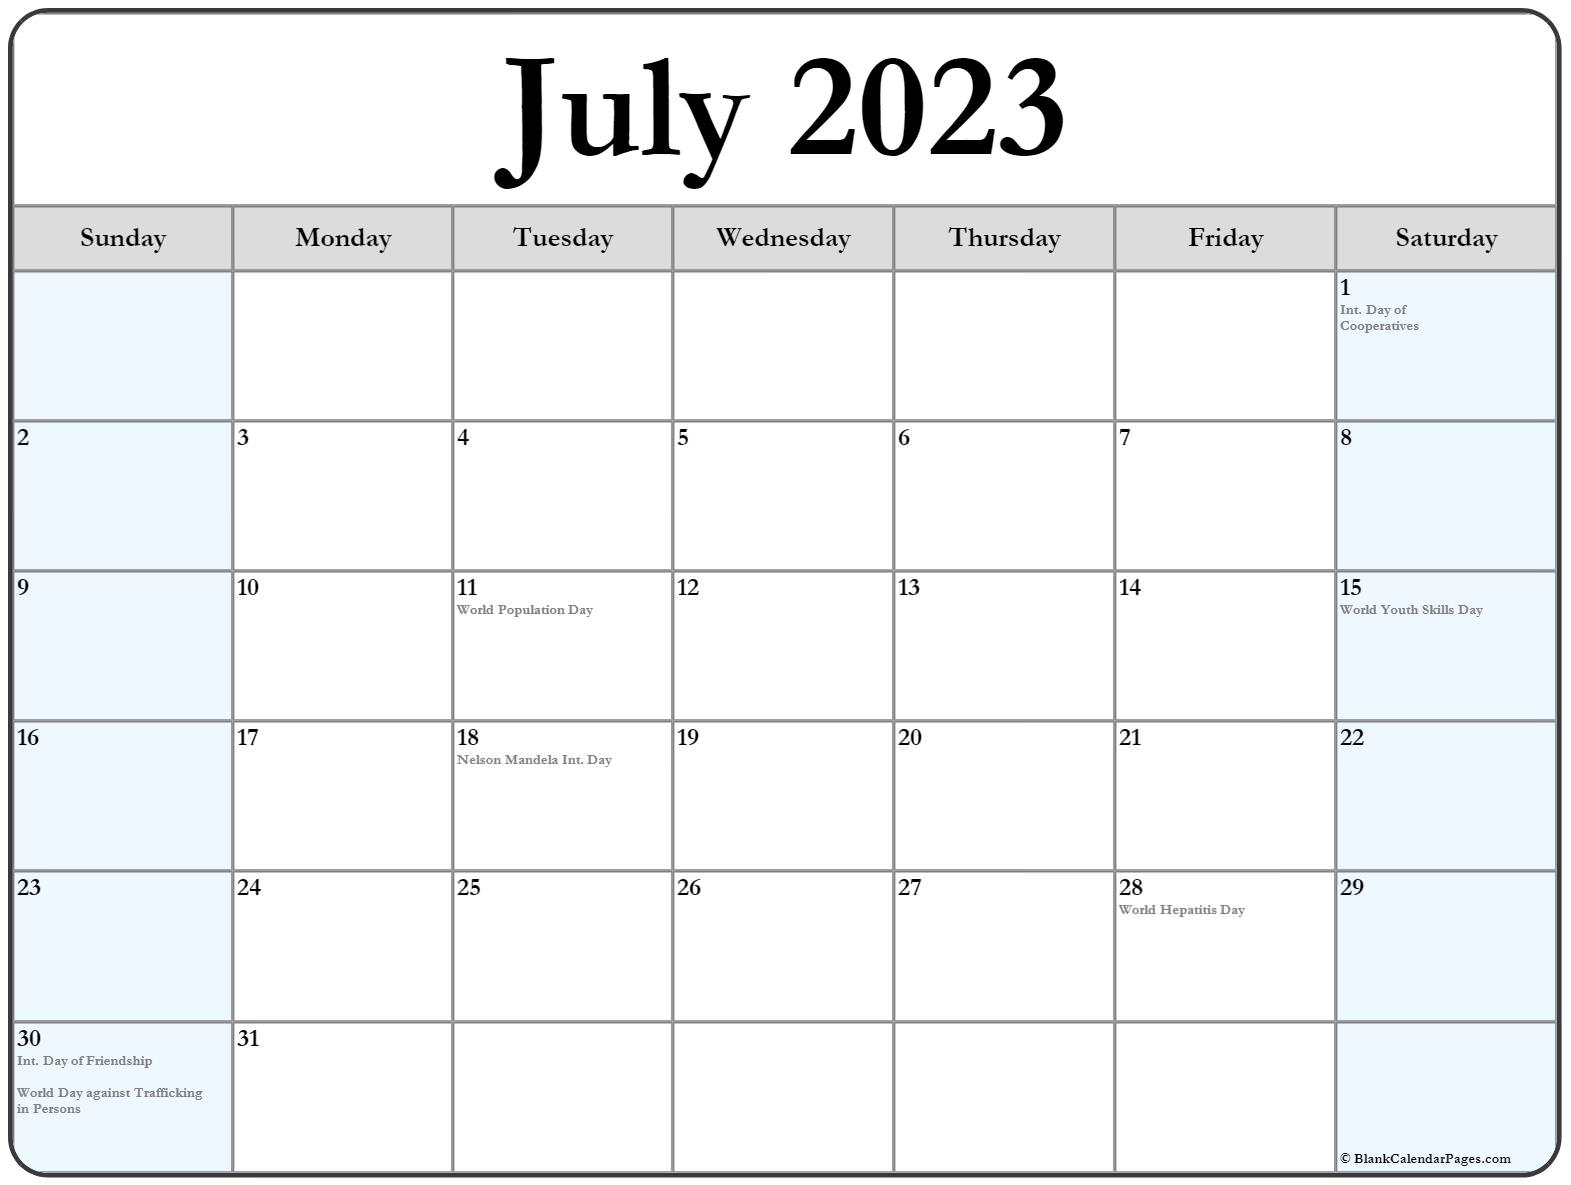 Take National Day Calendar June 2022